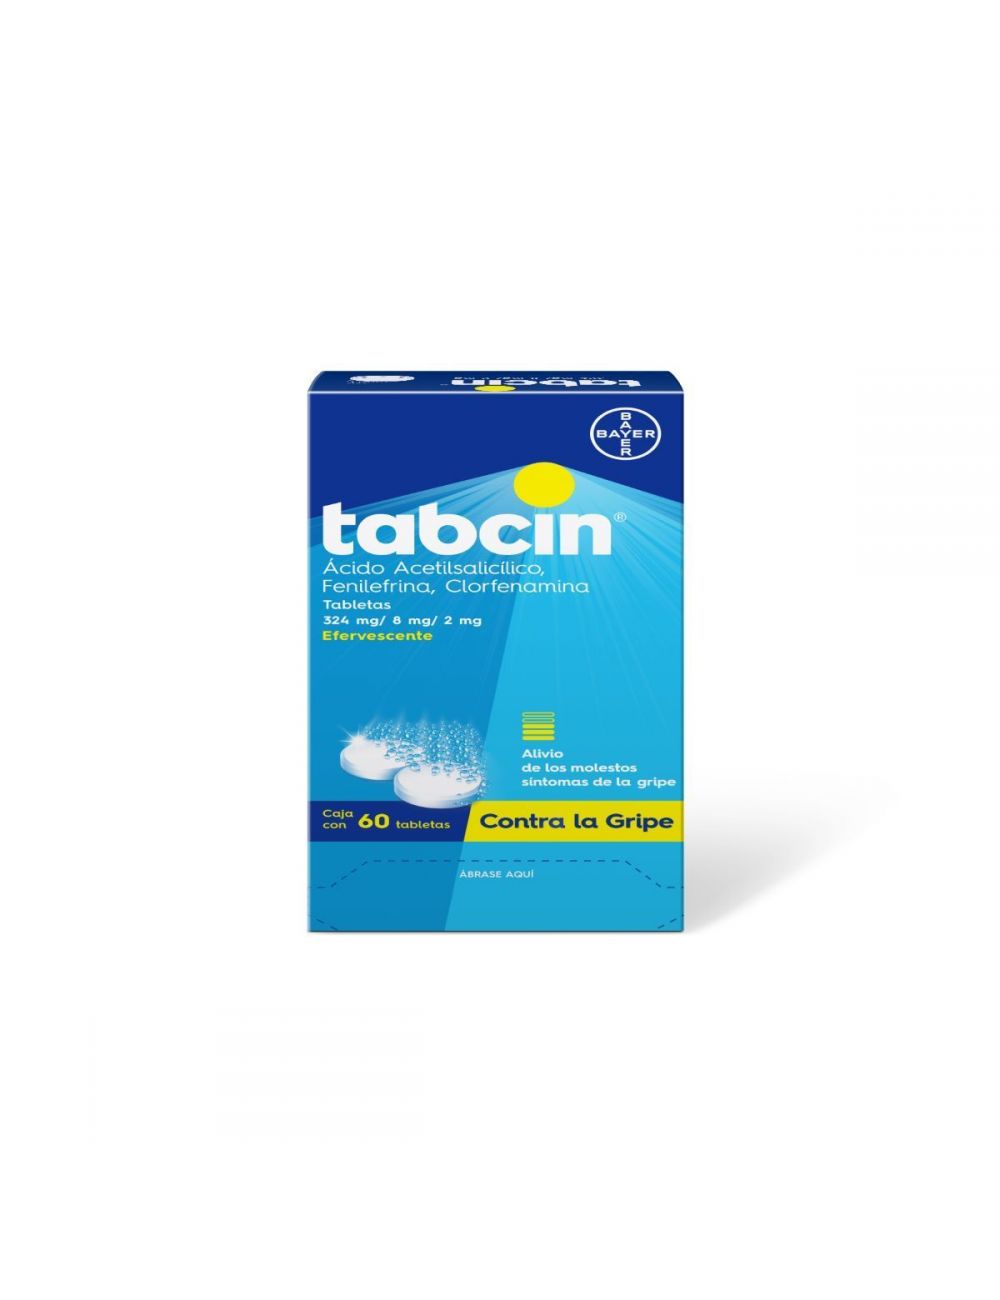 Tabcin Antigripal Efervescente 324/8/2 mg Caja Con 60 Tabletas